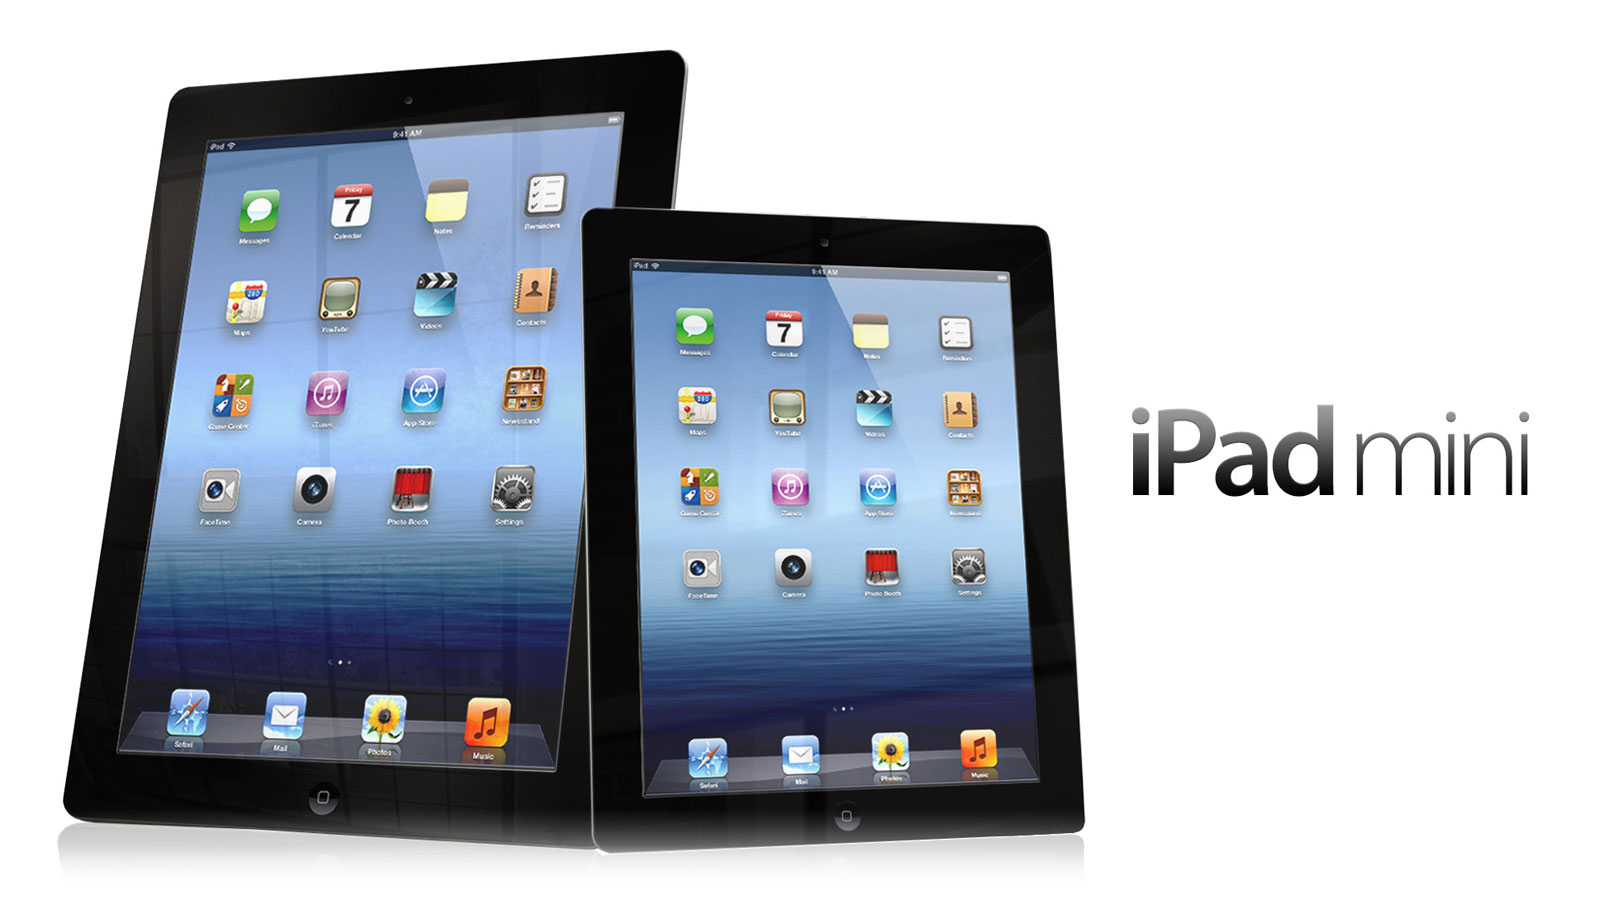 fonds d'écran ipad mini,gadget,ipad,tablette,la technologie,dispositif de communication